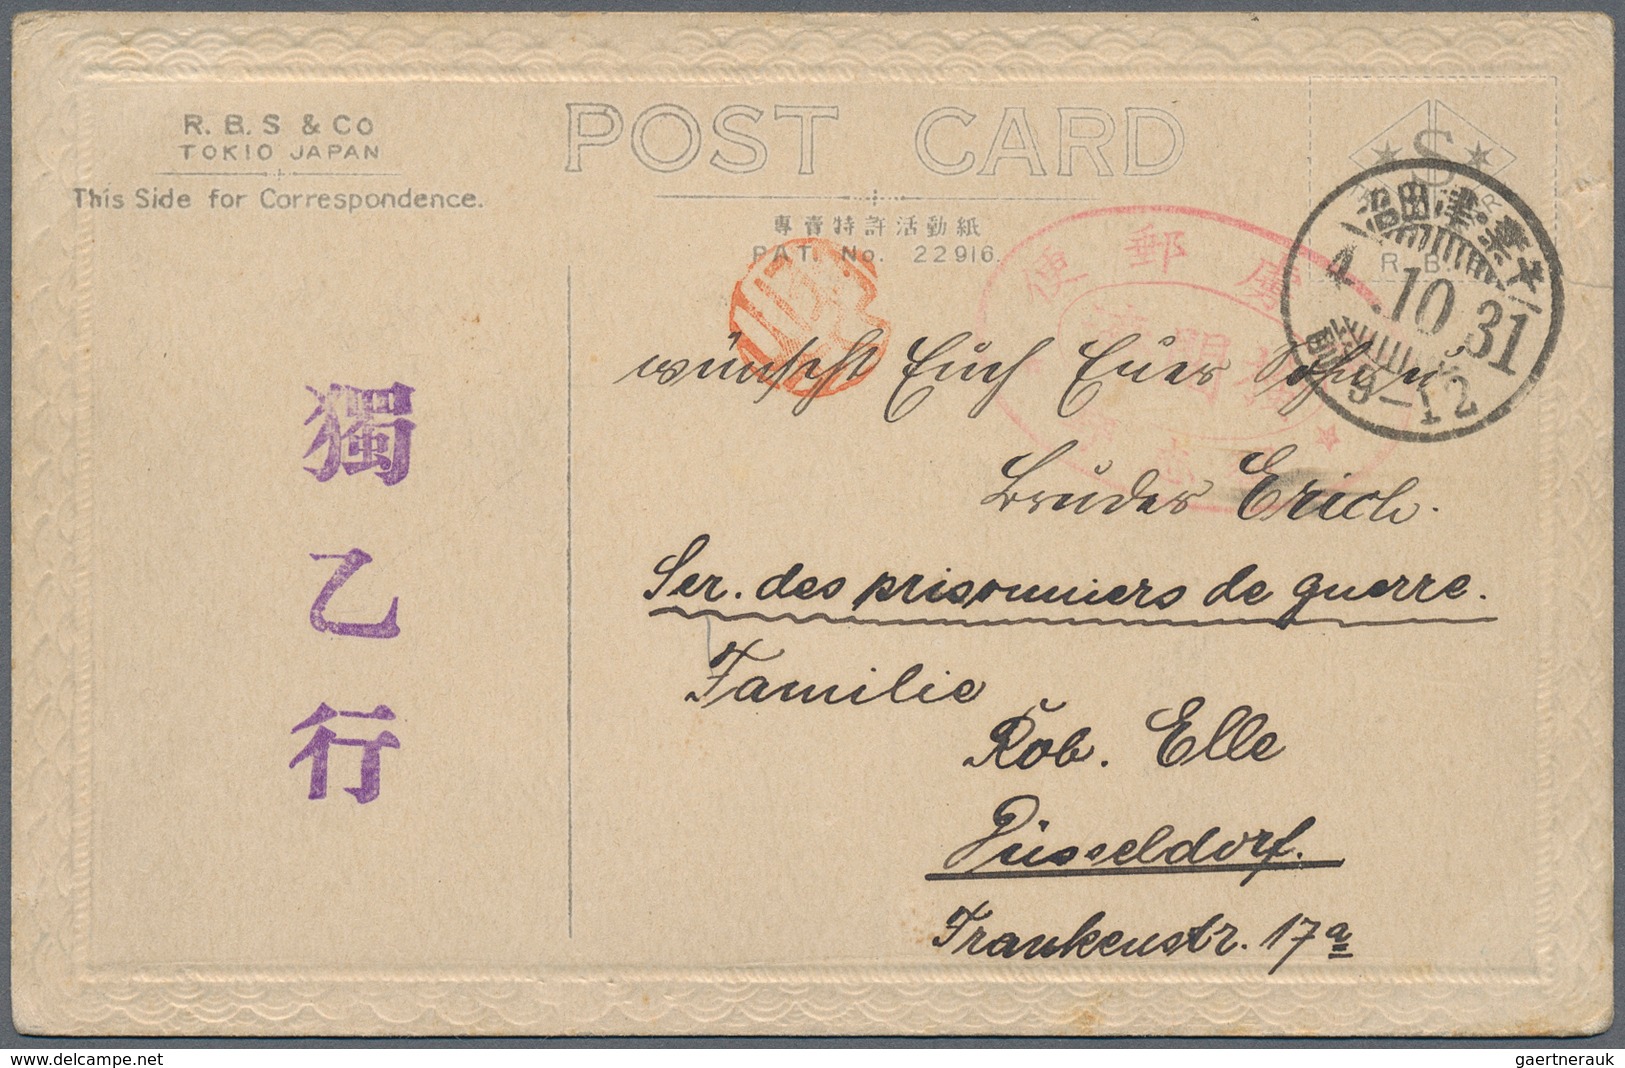 Lagerpost Tsingtau: Narashino, 1915/19, eight items: money letter envelope insured for Y.5.54 send b